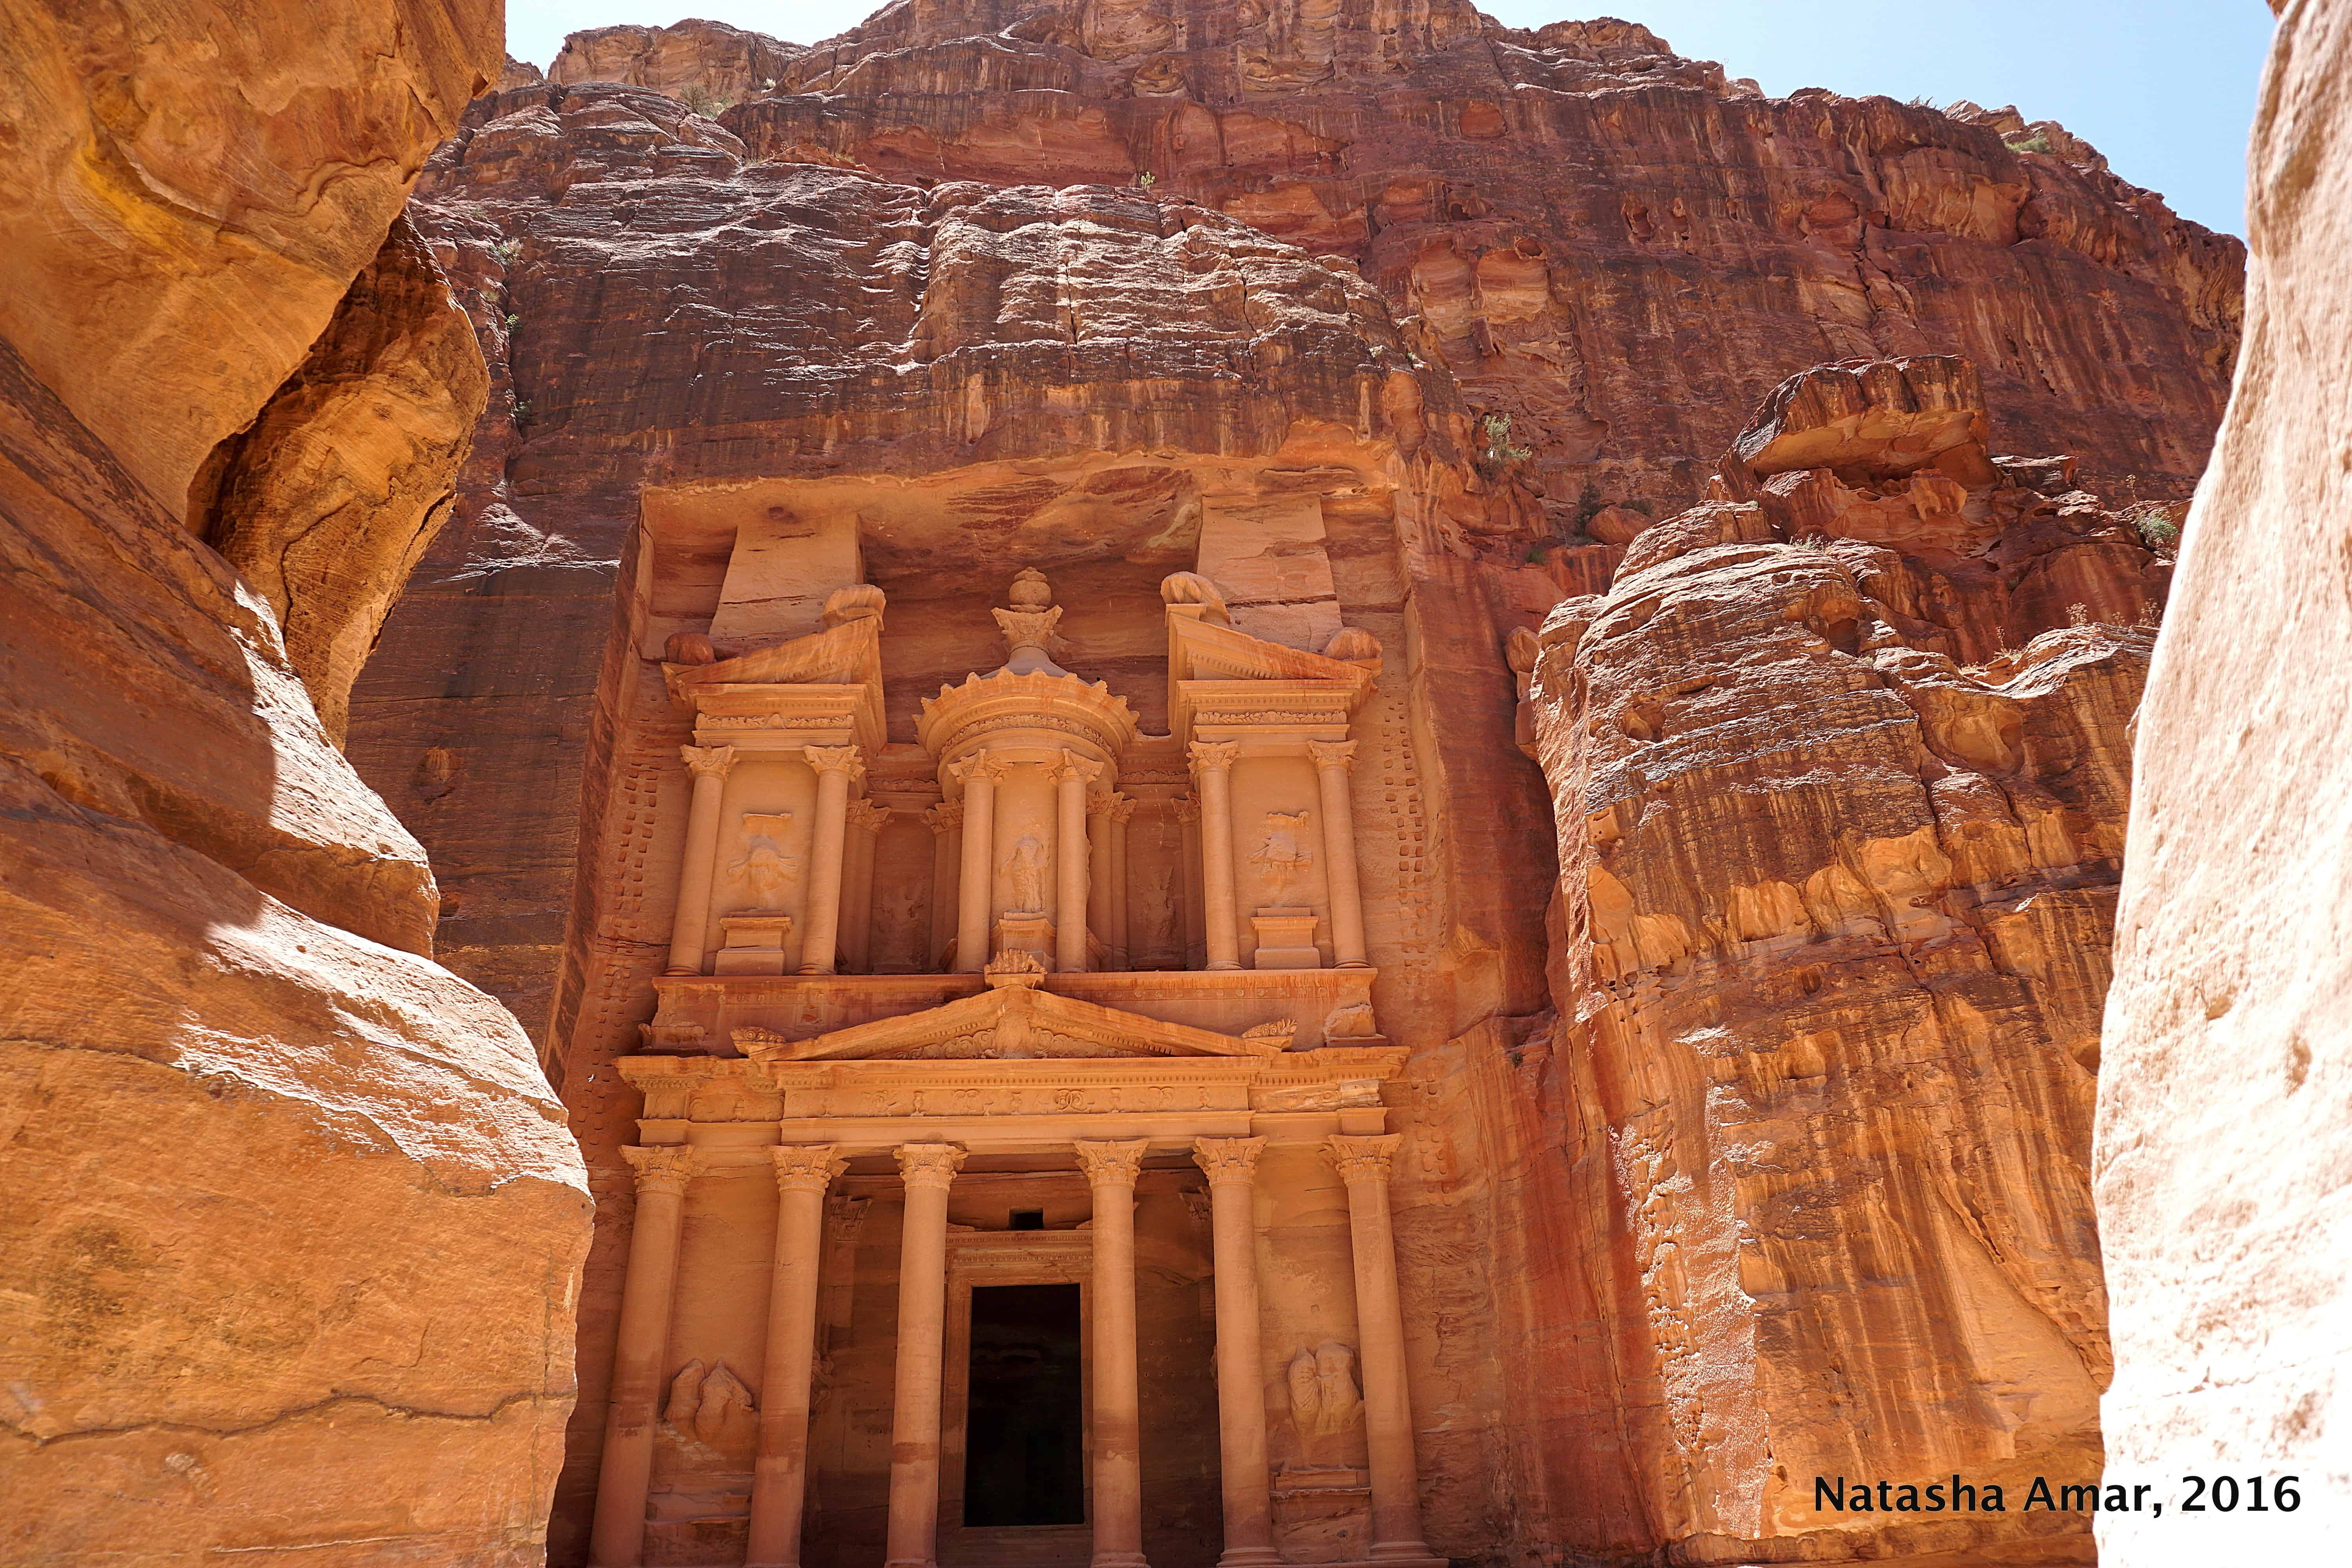 A Road Trip Across Jordan: From the Dead Sea to Petra